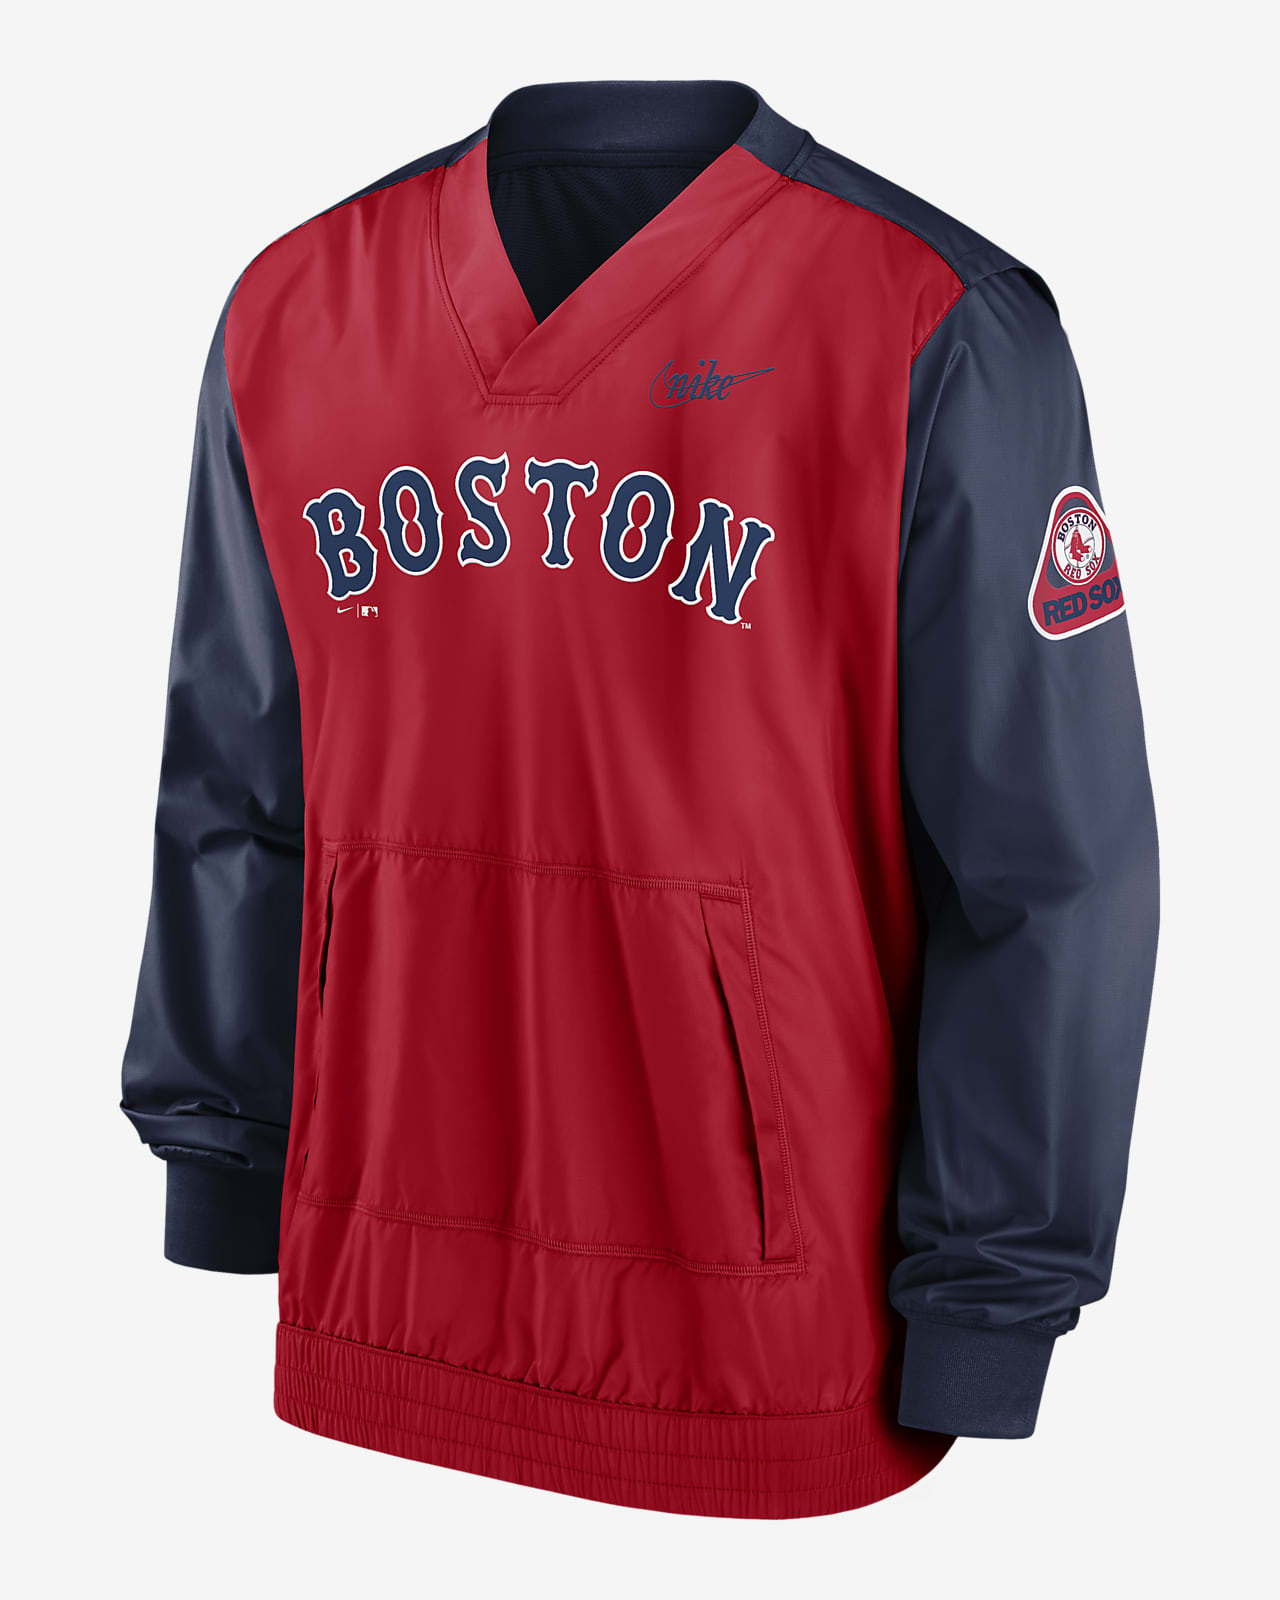 Red Sox jacket - philipshigh.co.uk